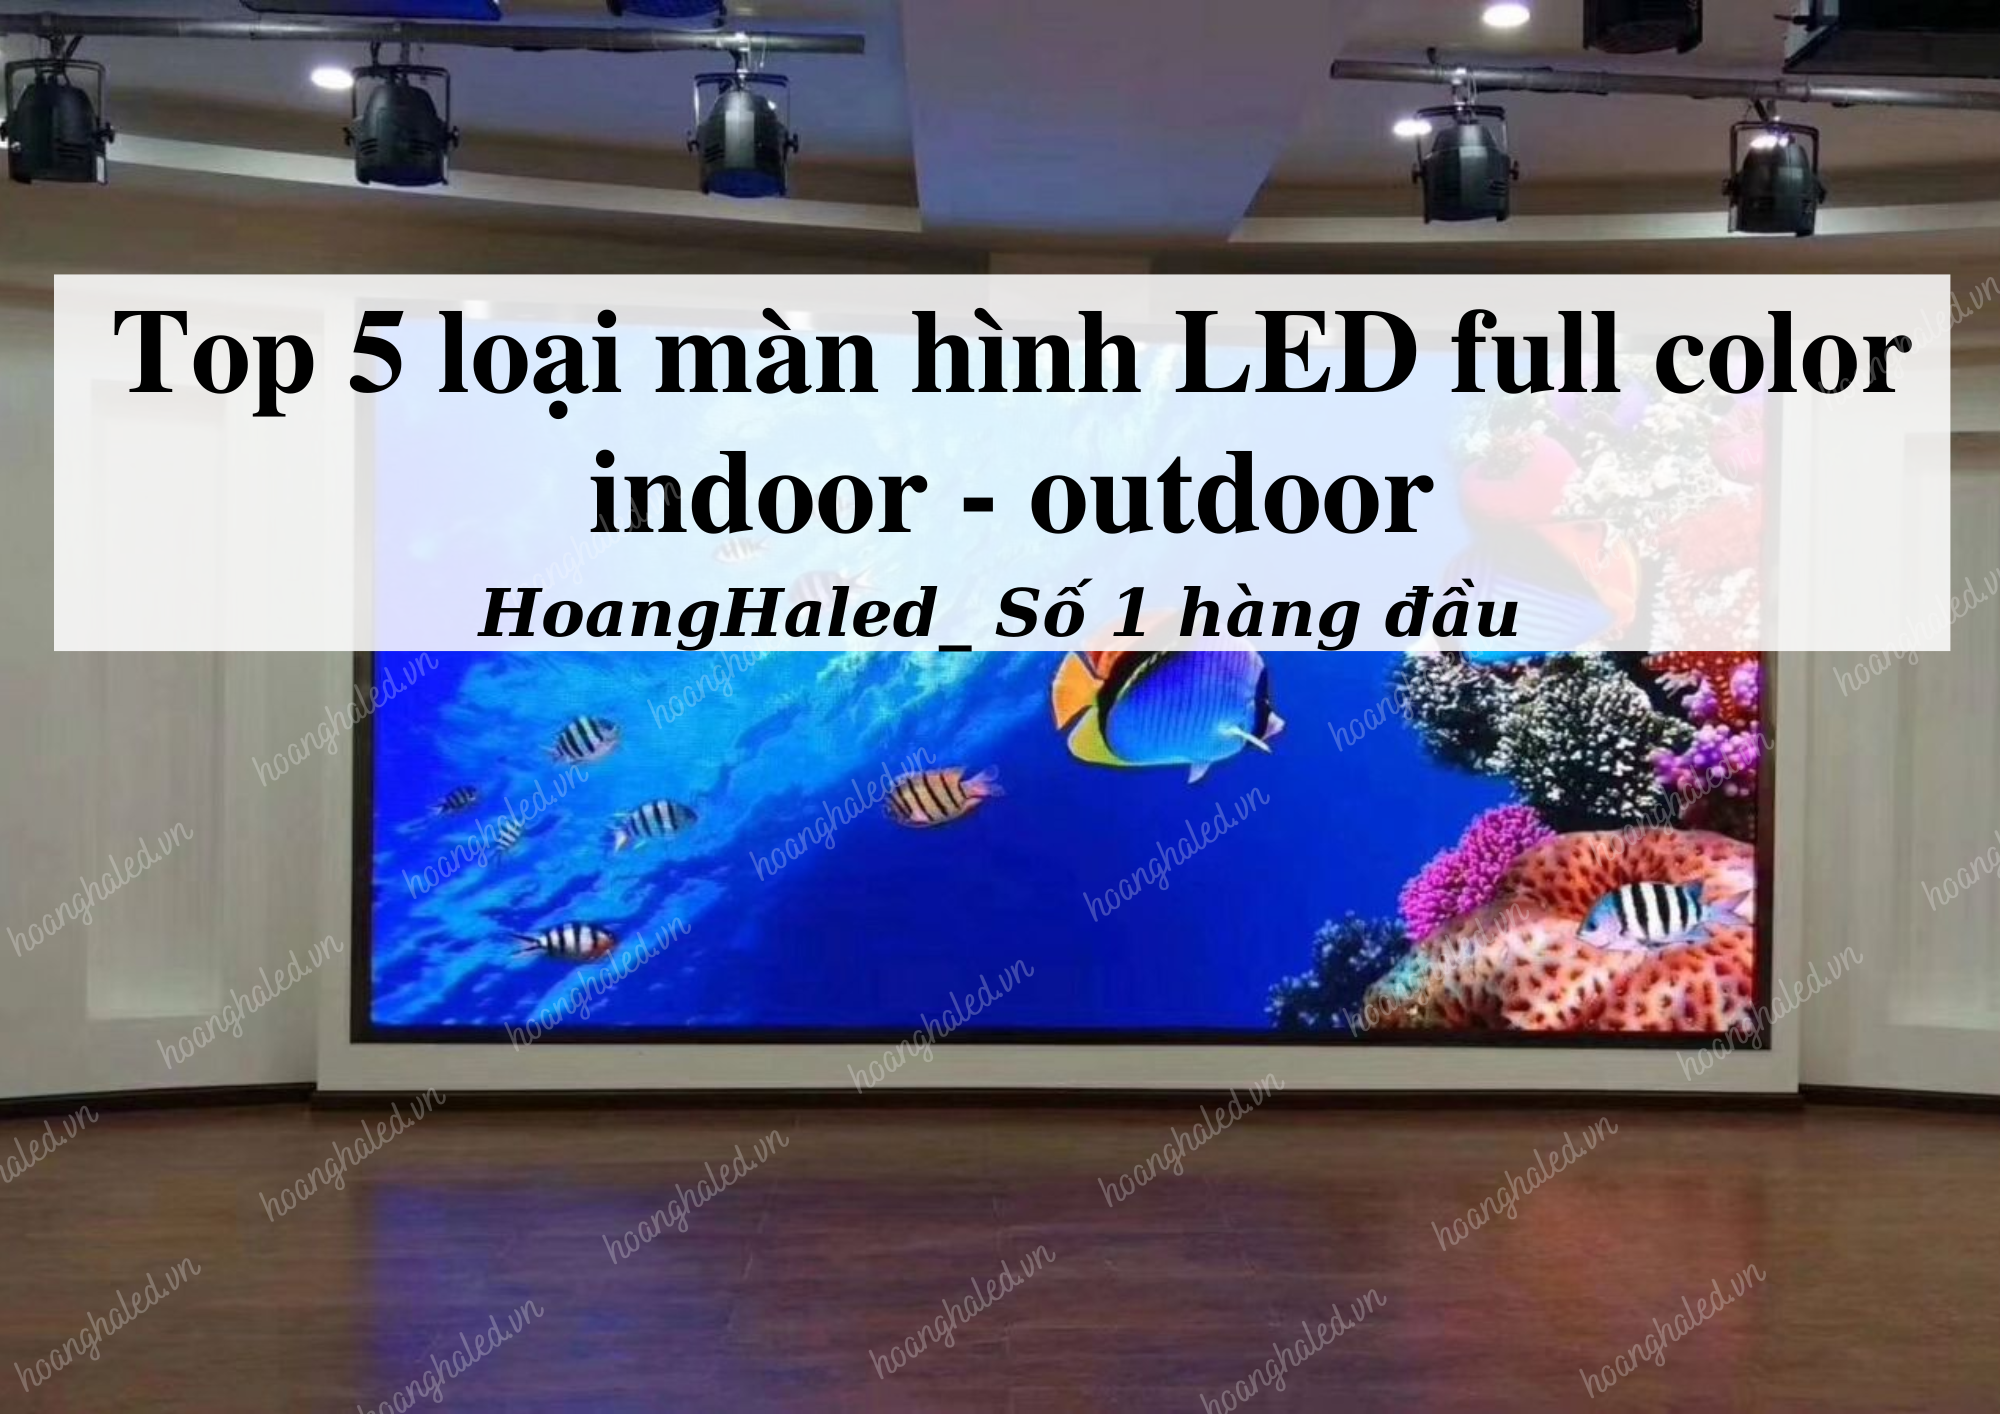 Top 5 loai man hinh LED full indoor outdoor